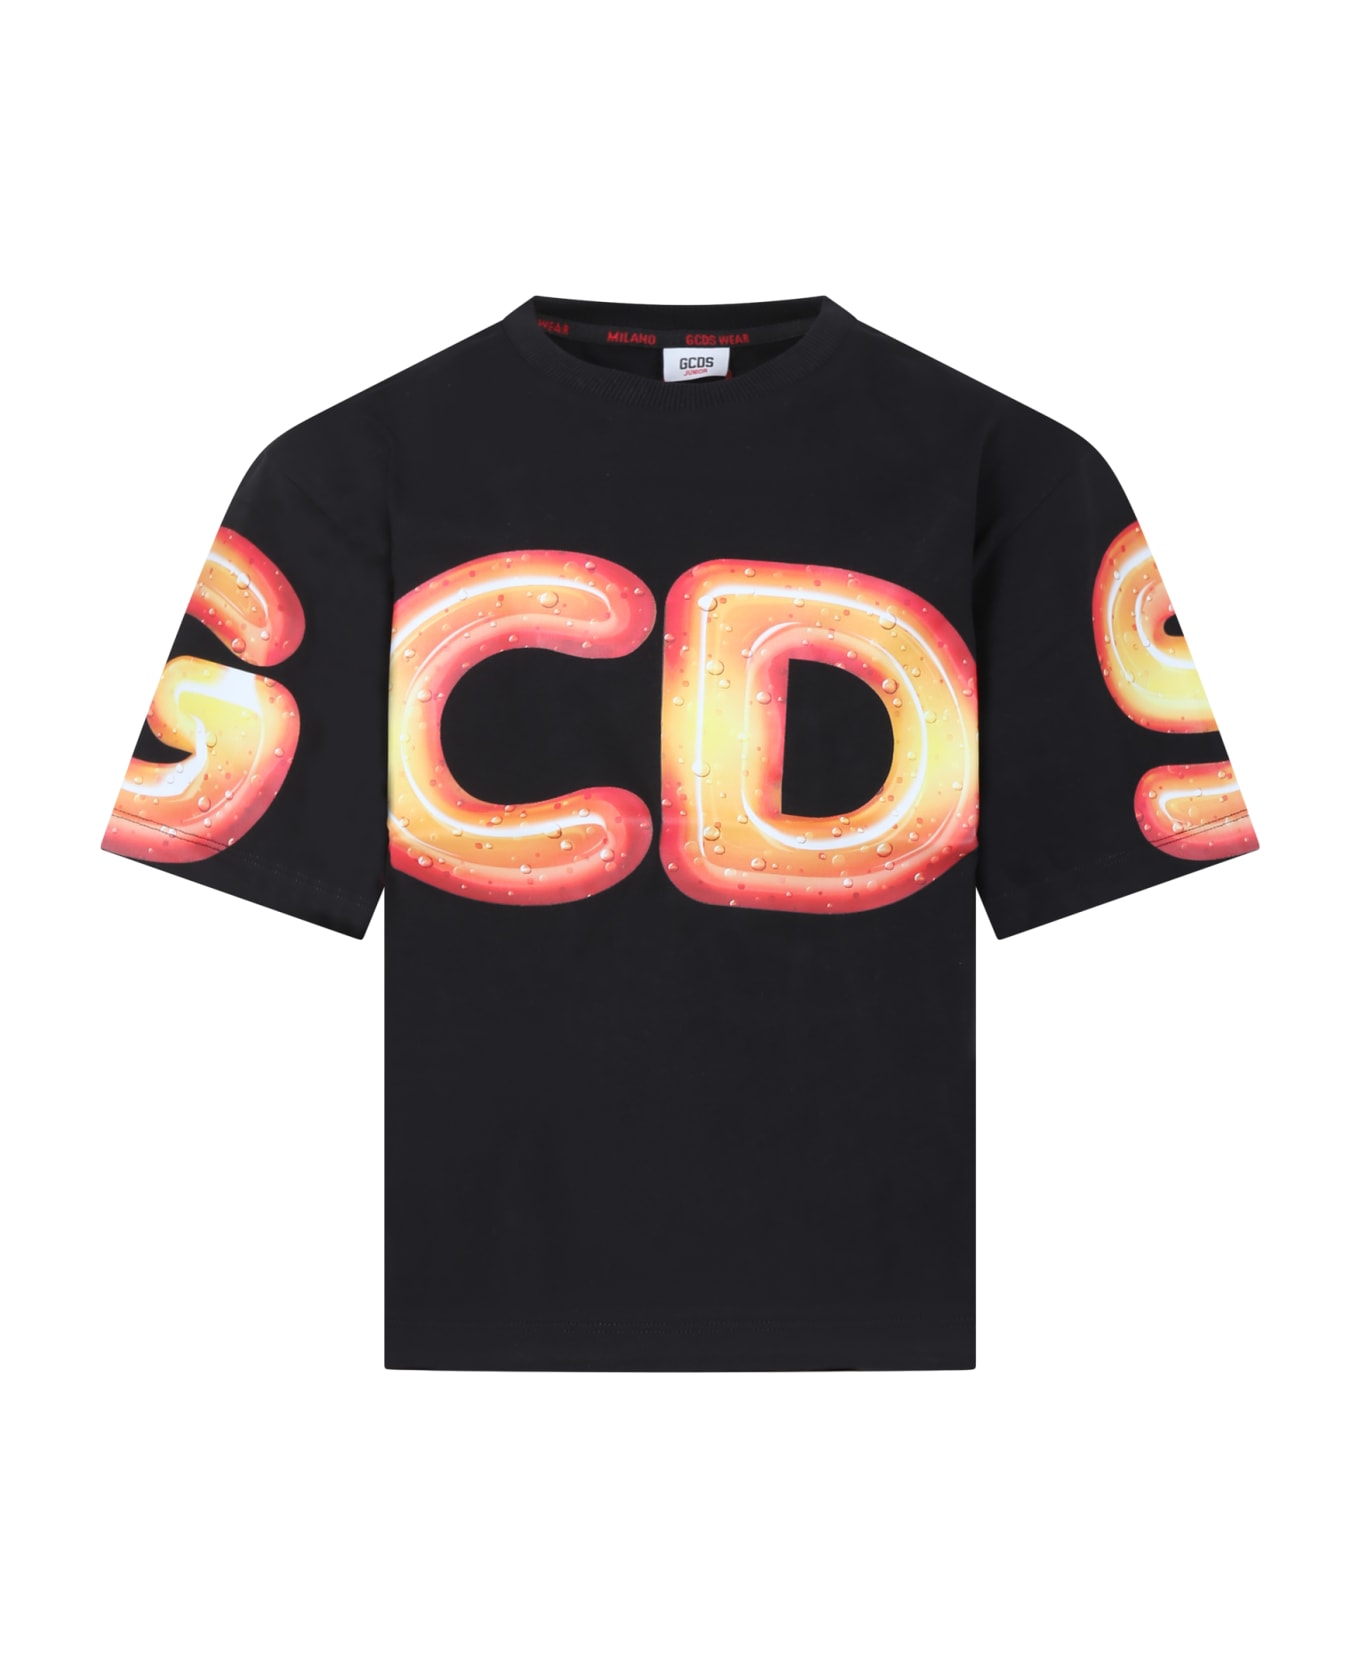 GCDS Mini Black T-shirt For Kids With Logo - Black